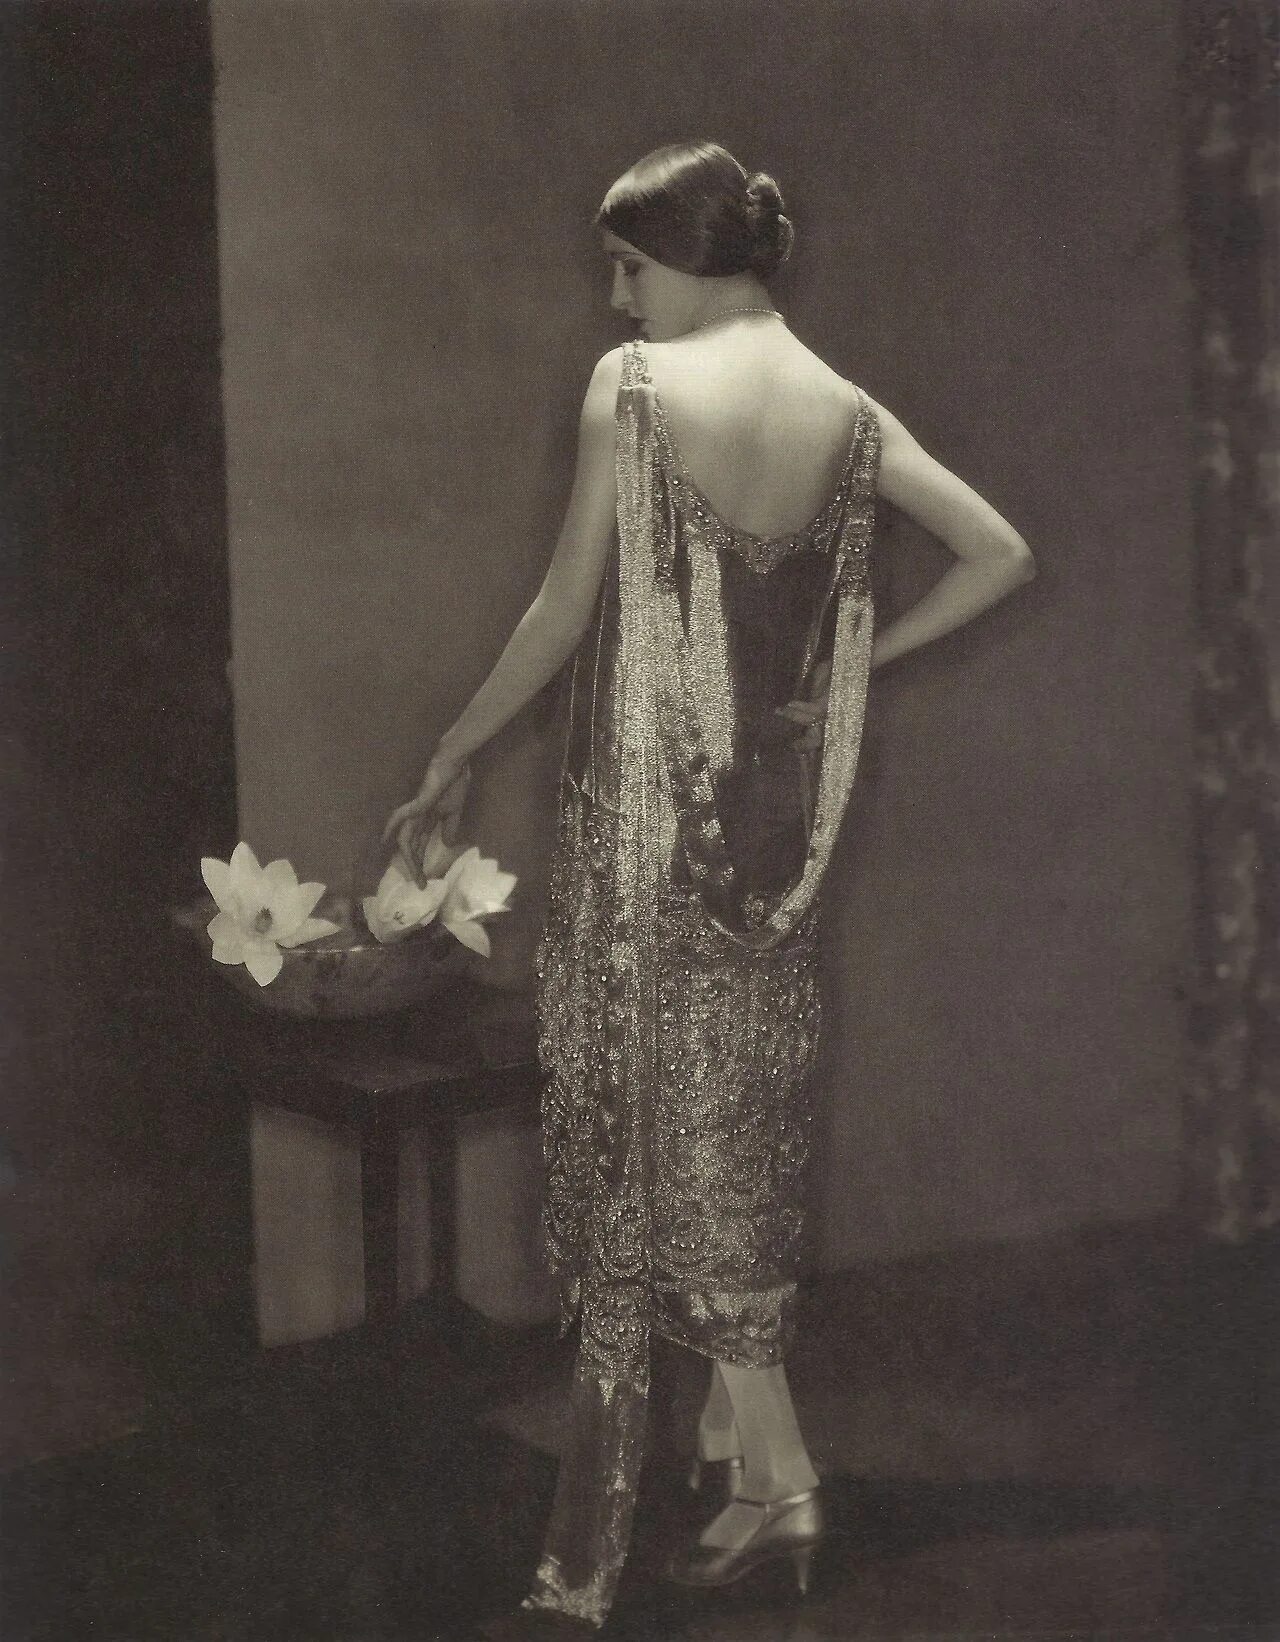 Фото 20х. Марион Морхаус. Коко Шанель 20е. Платья 1920-х годов Коко Шанель.